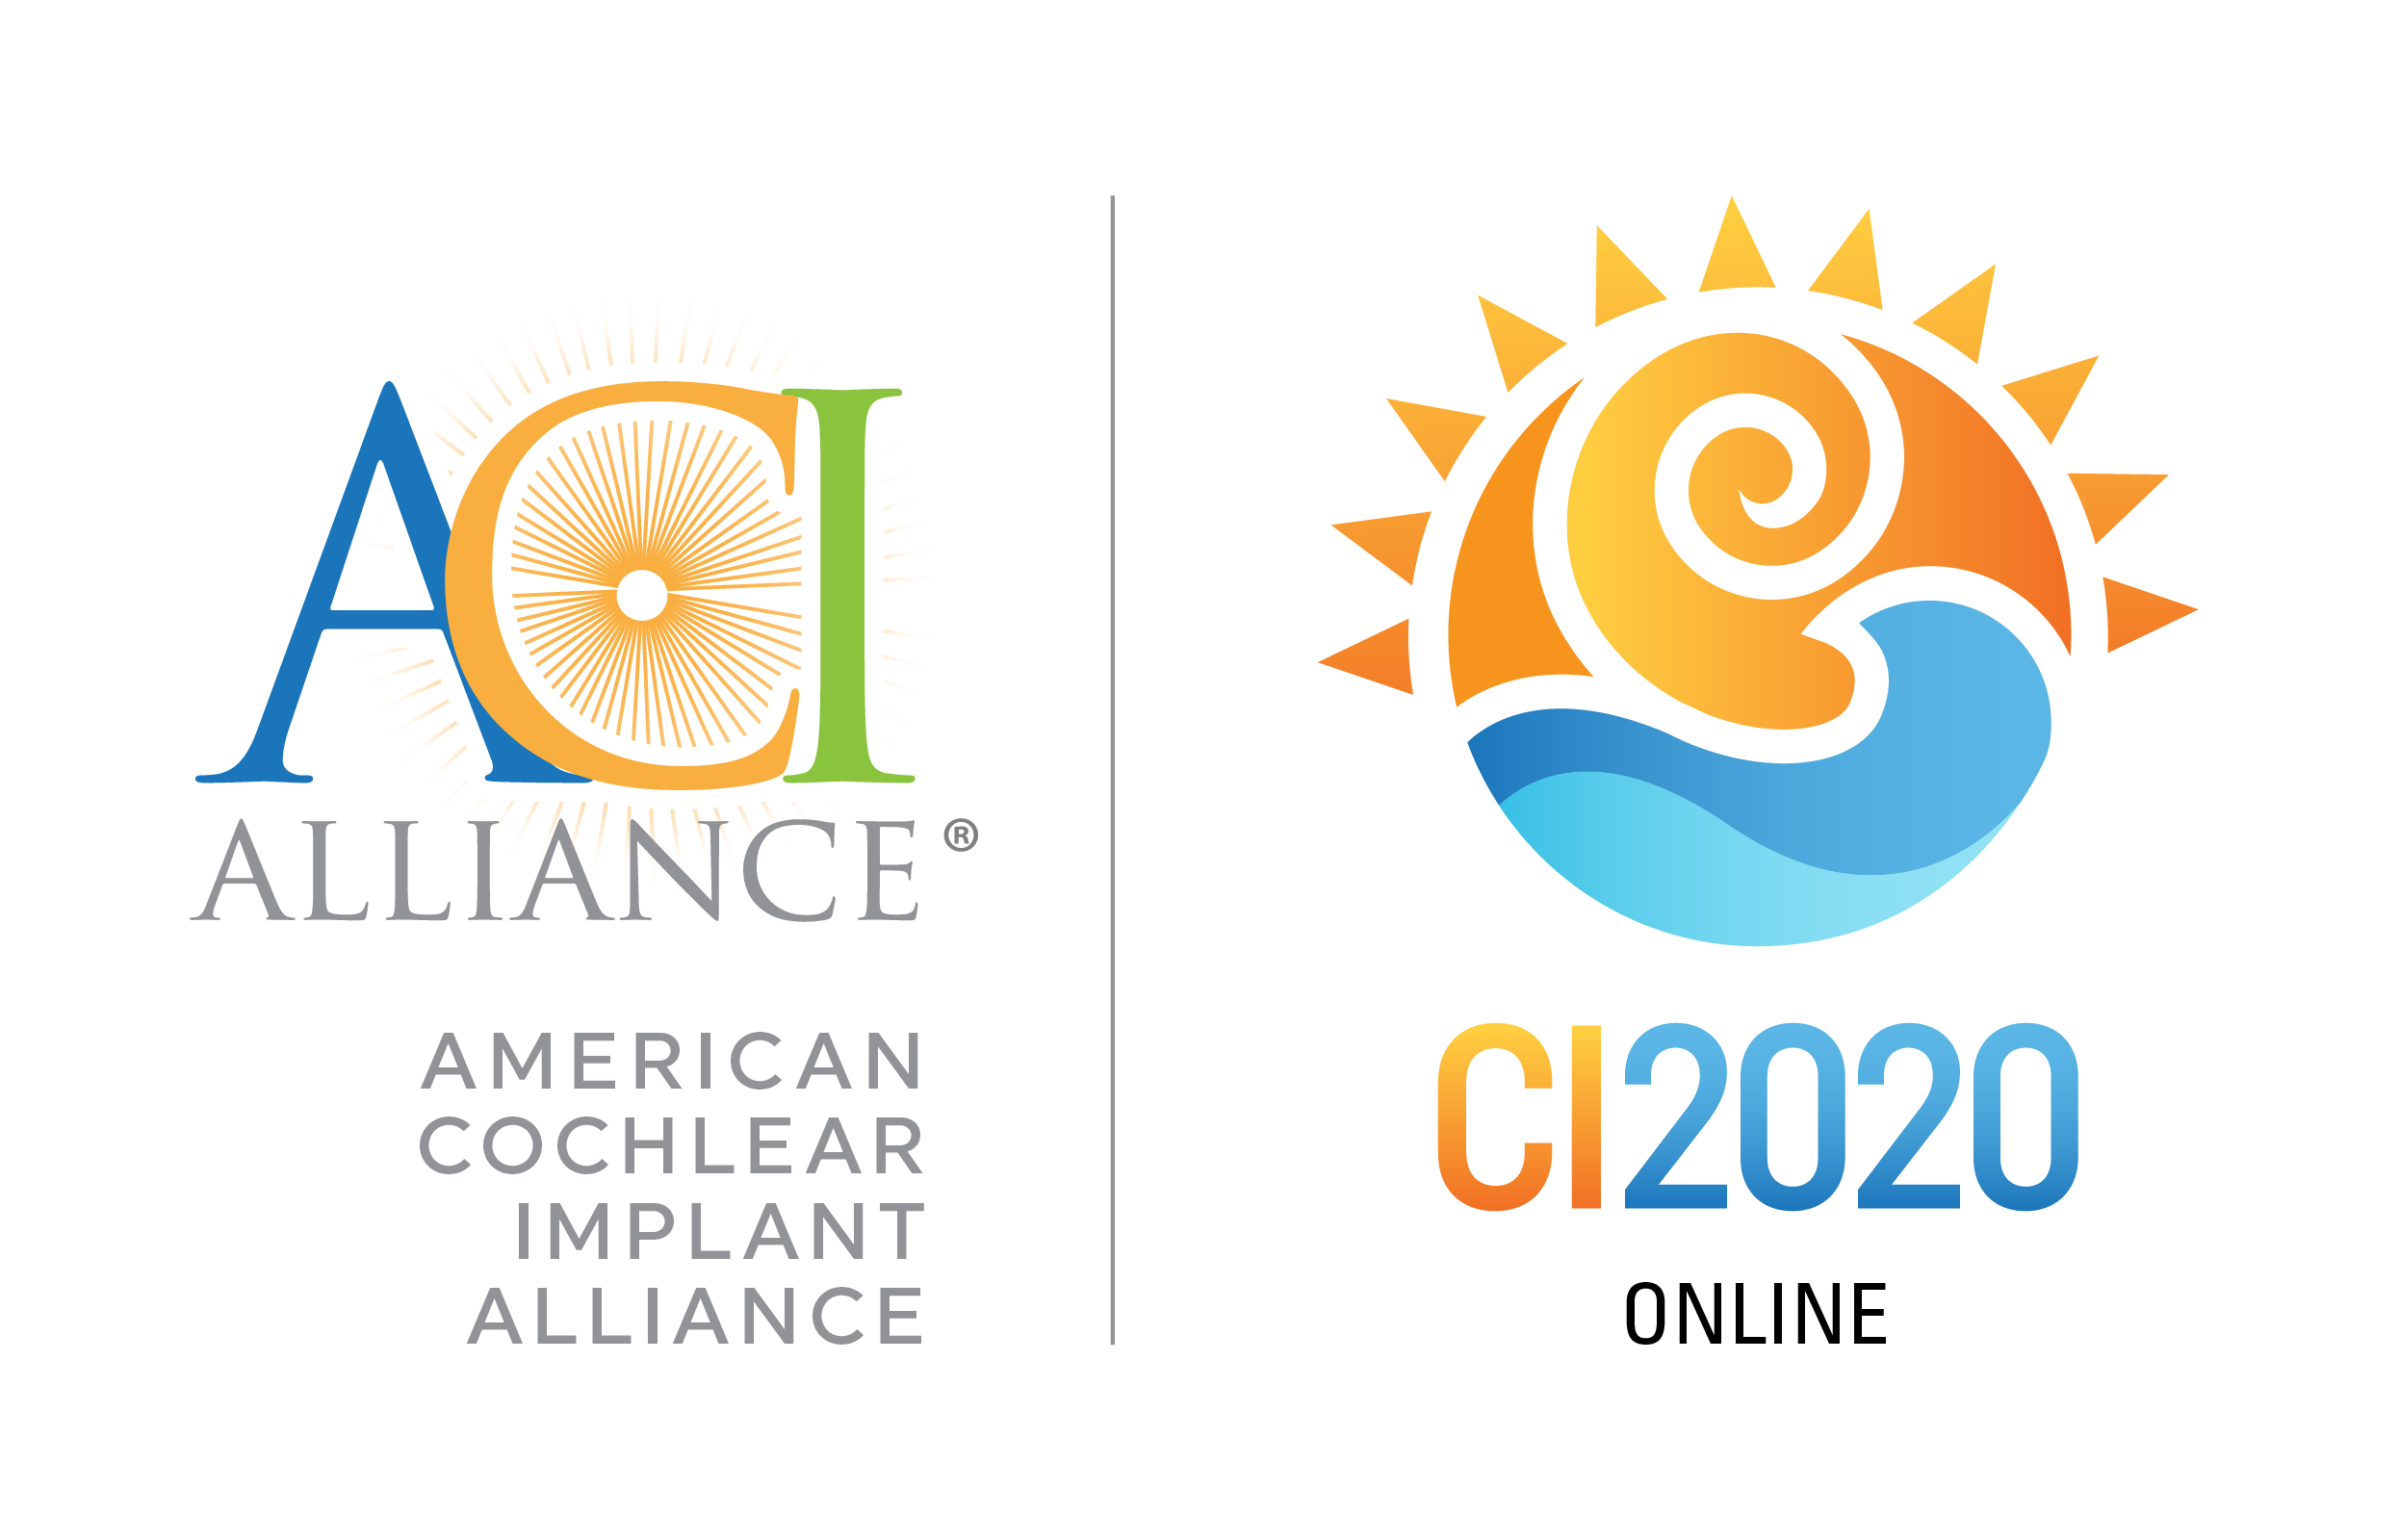 ACI Alliance and CI 2020 logo